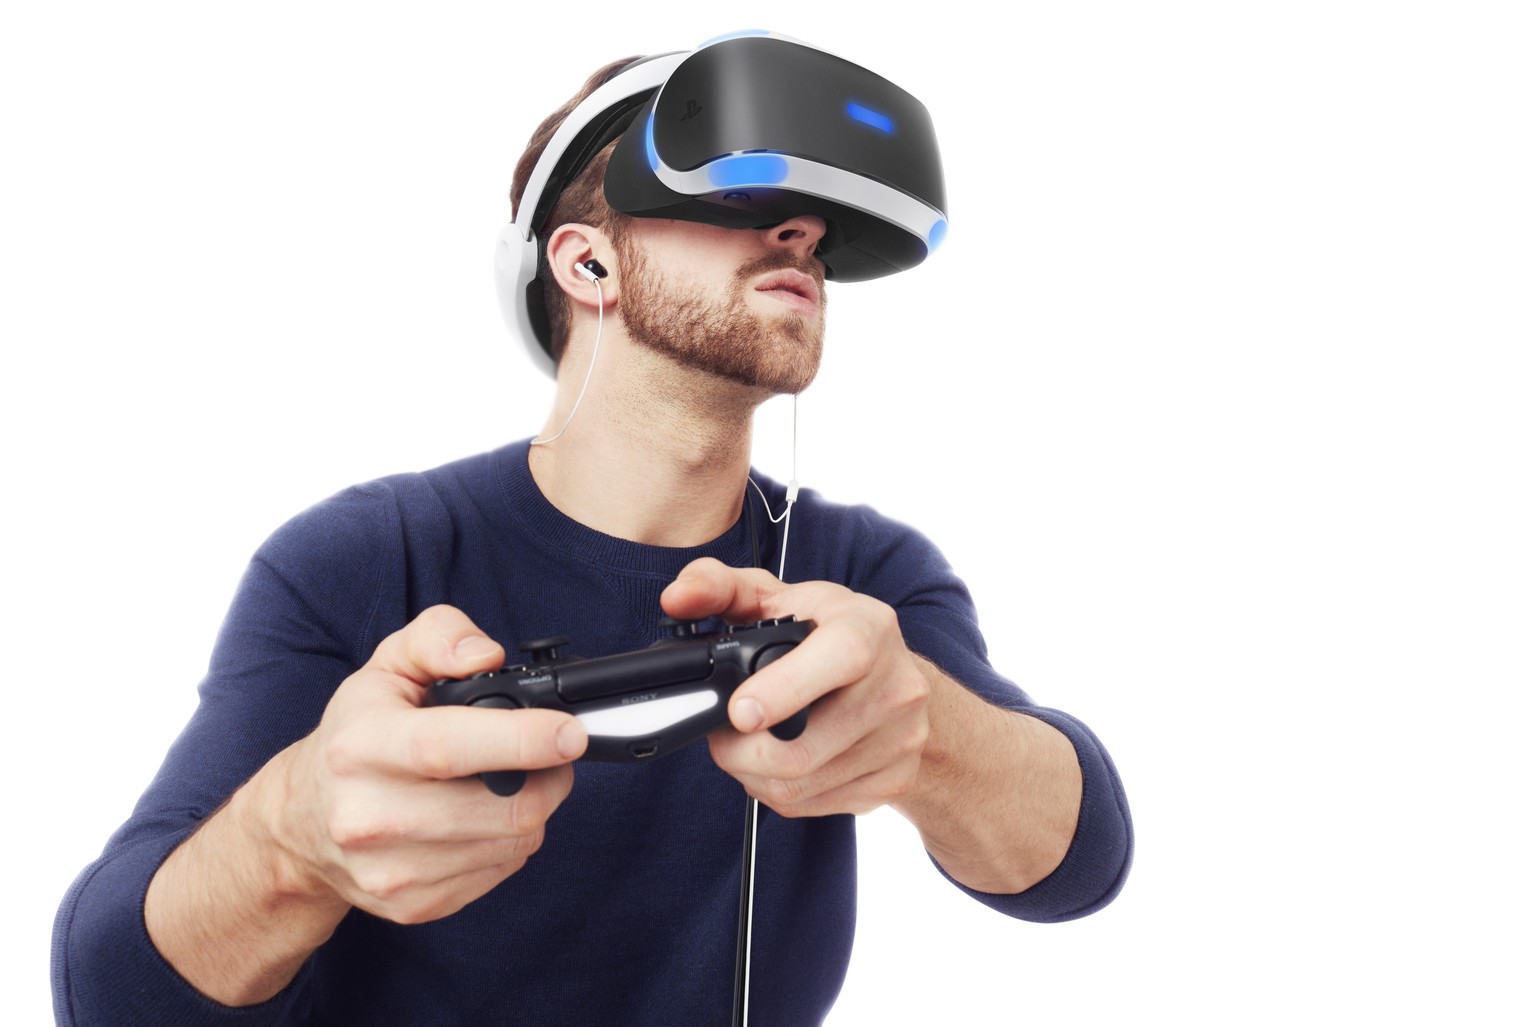 Ja, die Playstation VR lebt noch!